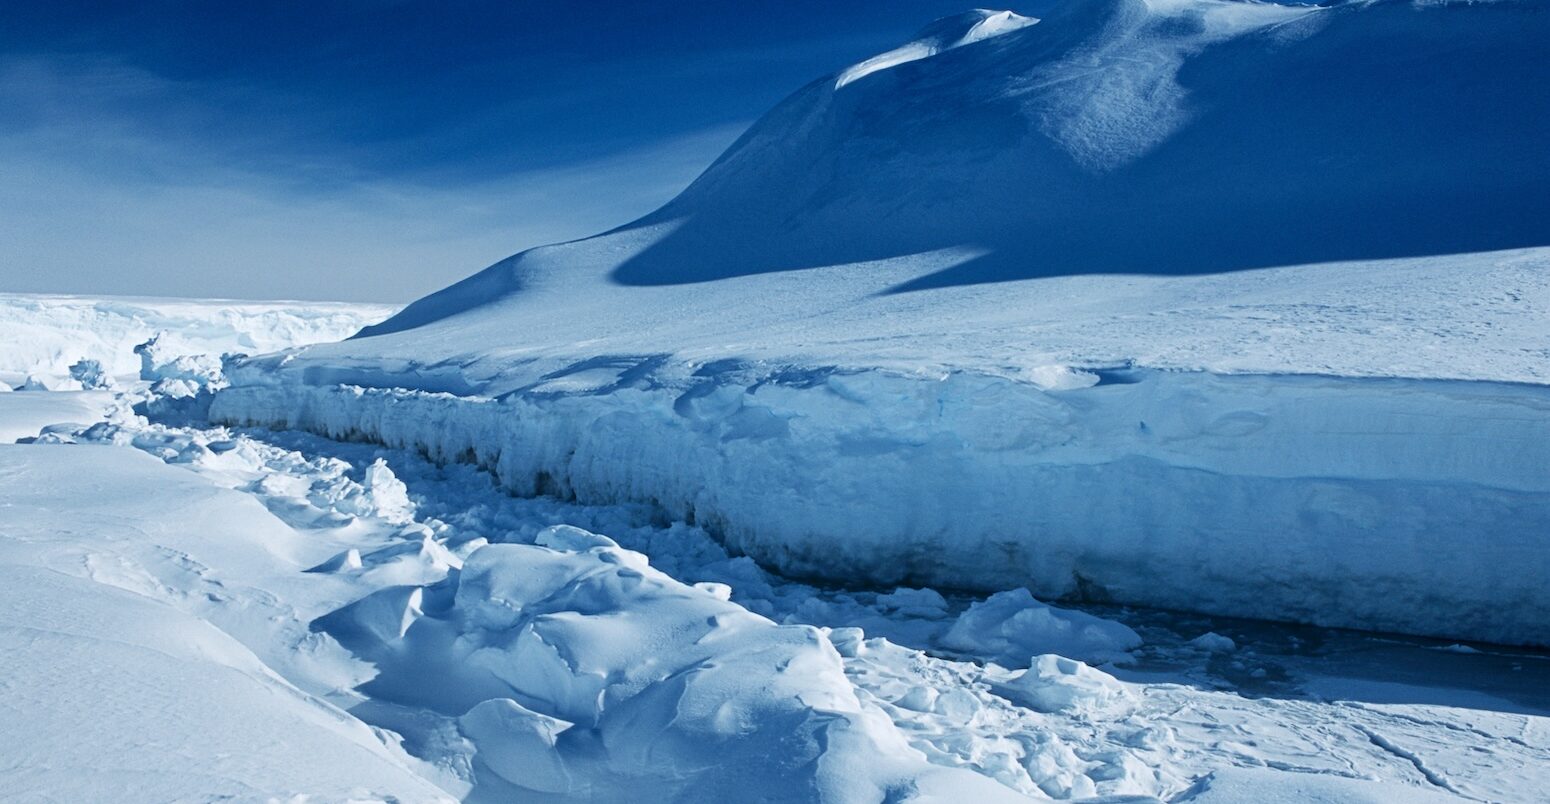 Riiser Larsen Ice Shelf in Weddell Sea, Antarctica.